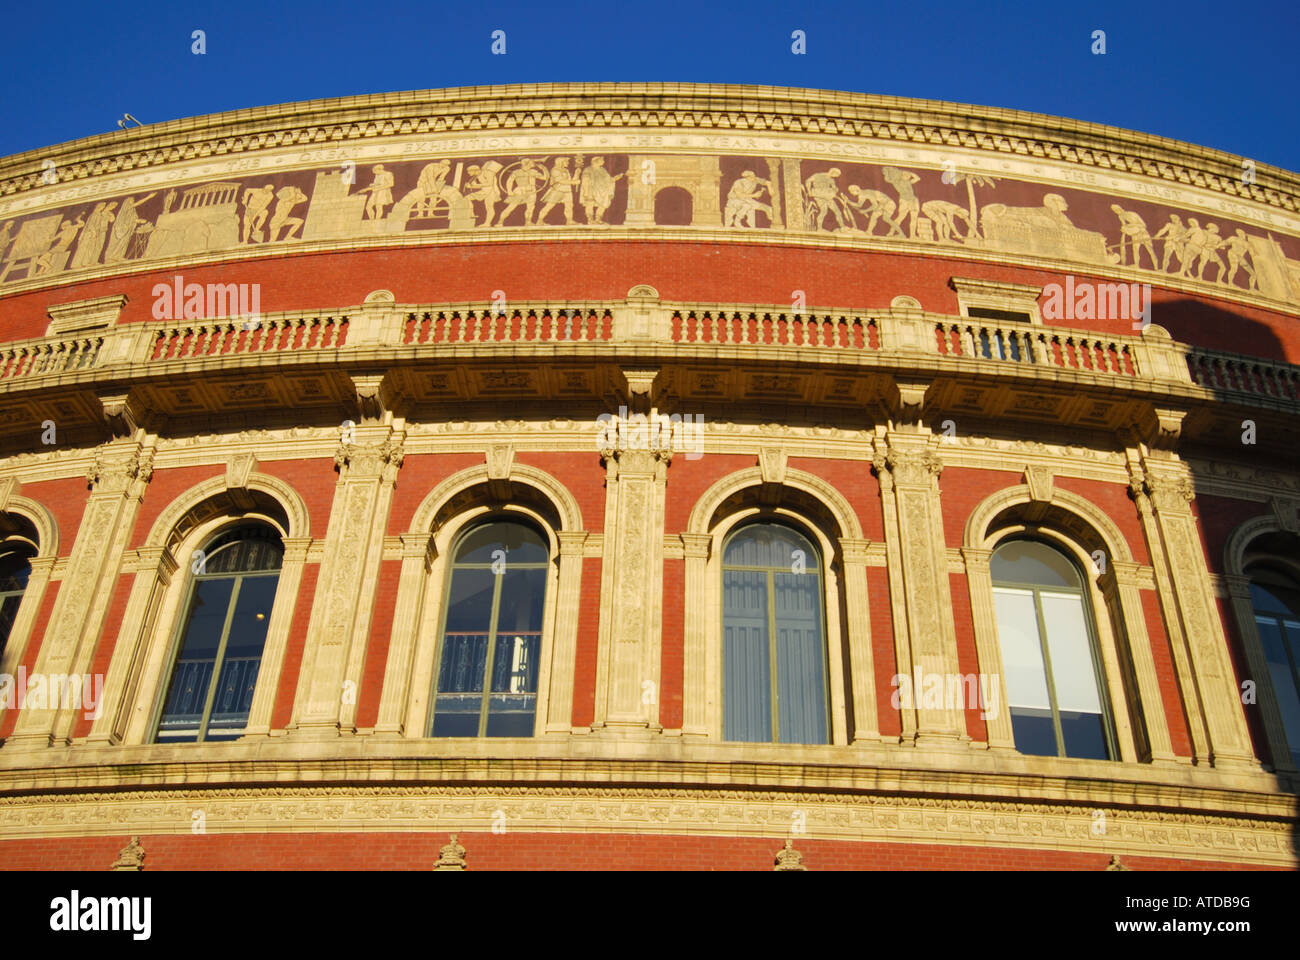 Exterior view at sunset, Royal Albert Hall, Kensington, London, England, United Kingdom Stock Photo